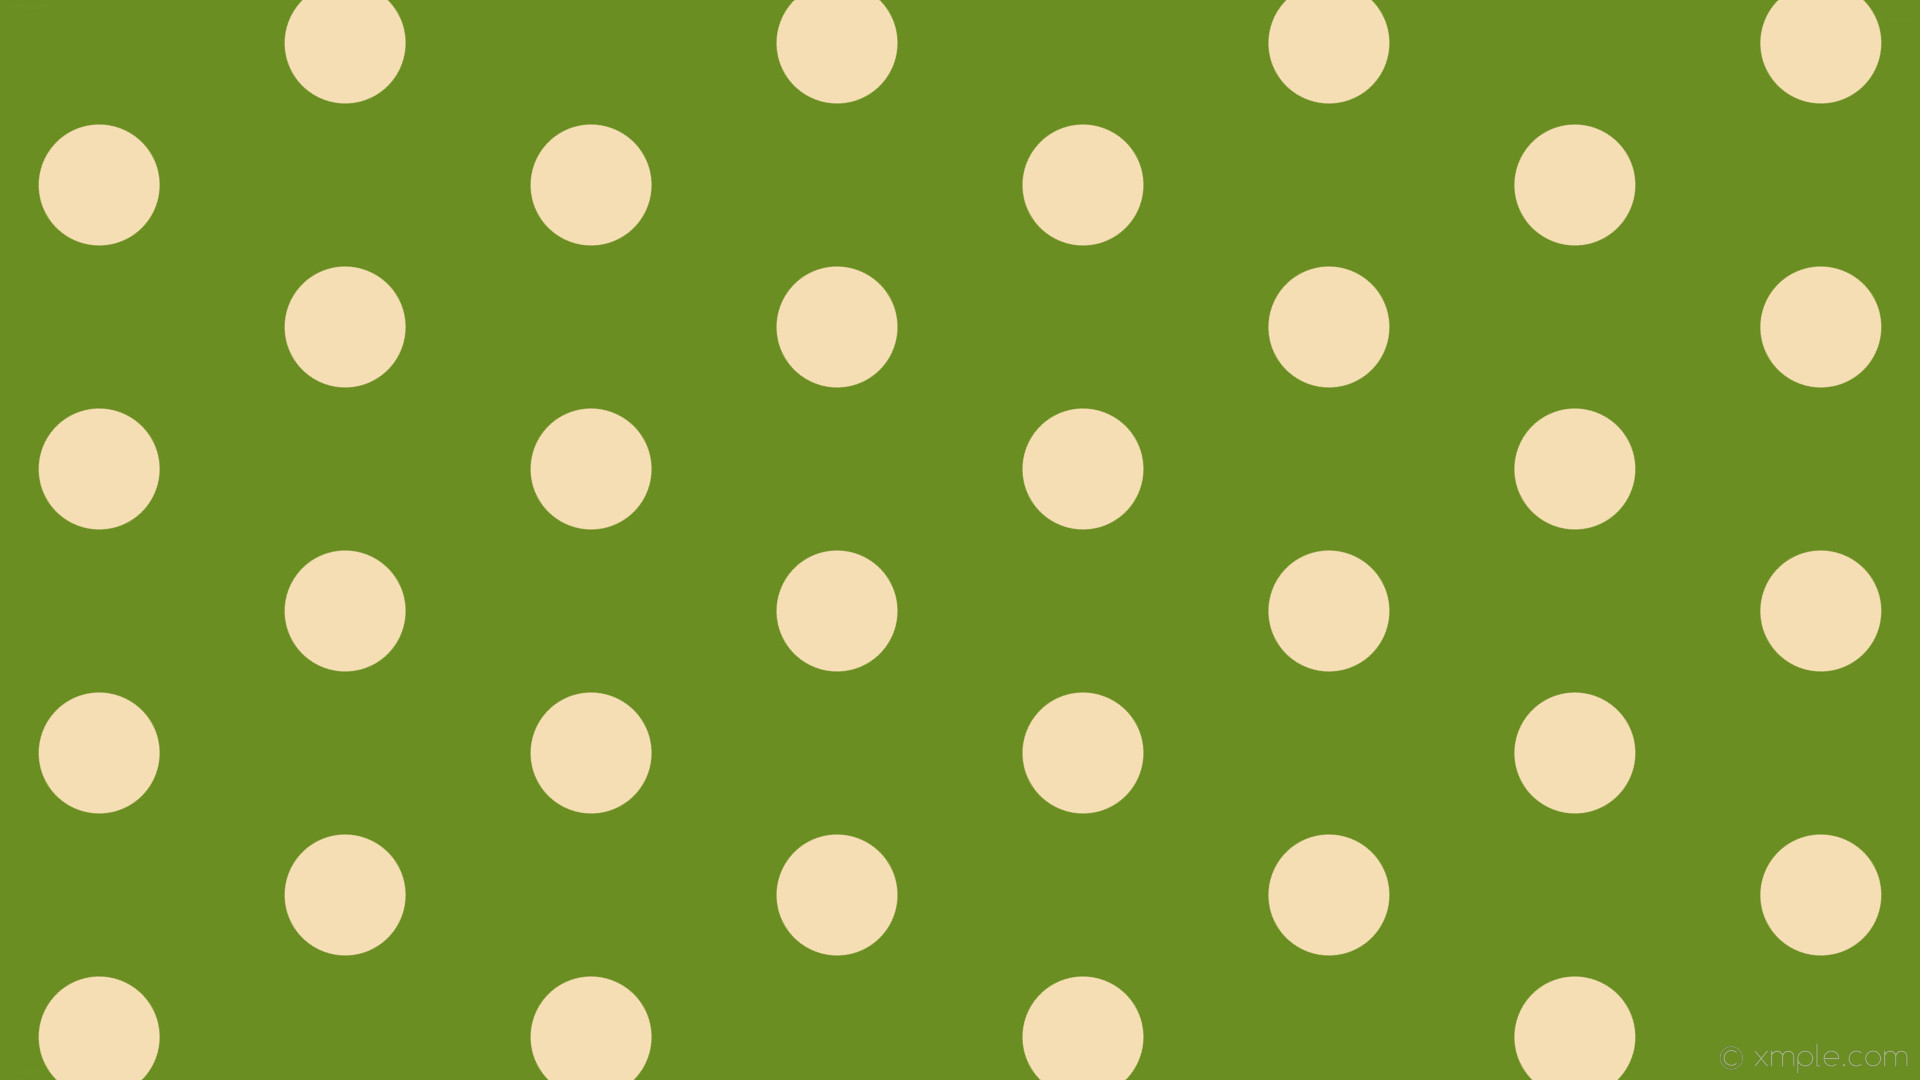 1920x1080 wallpaper green brown polka dots hexagon olive drab wheat #6b8e23 #f5deb3  diagonal 30Â°